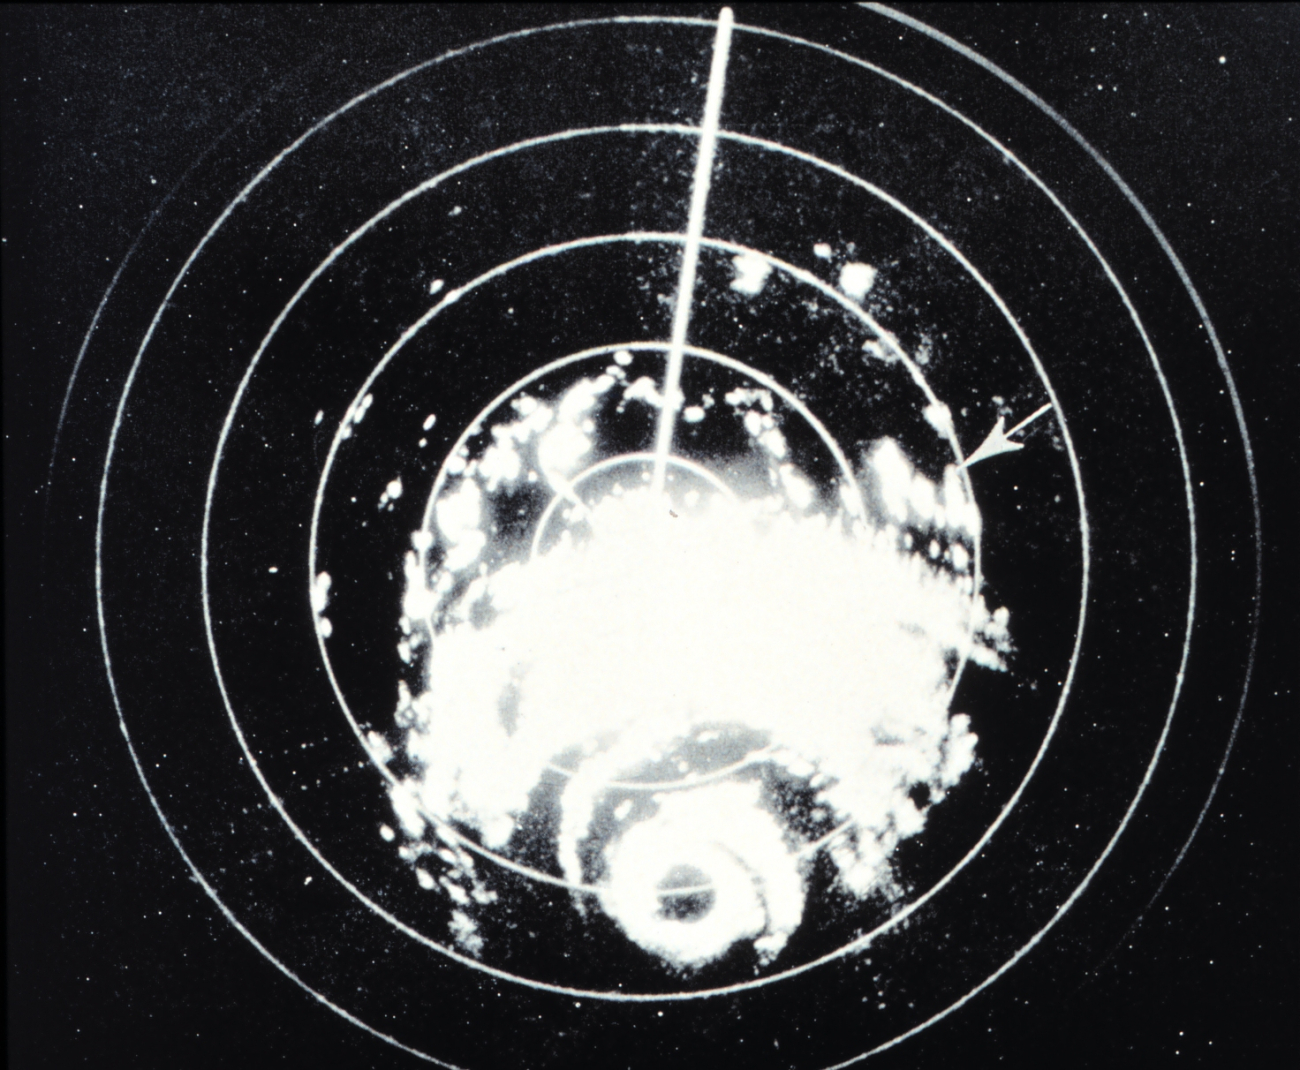 Hurricane Carla as seen by WSR-57 radar at Galveston, Texas